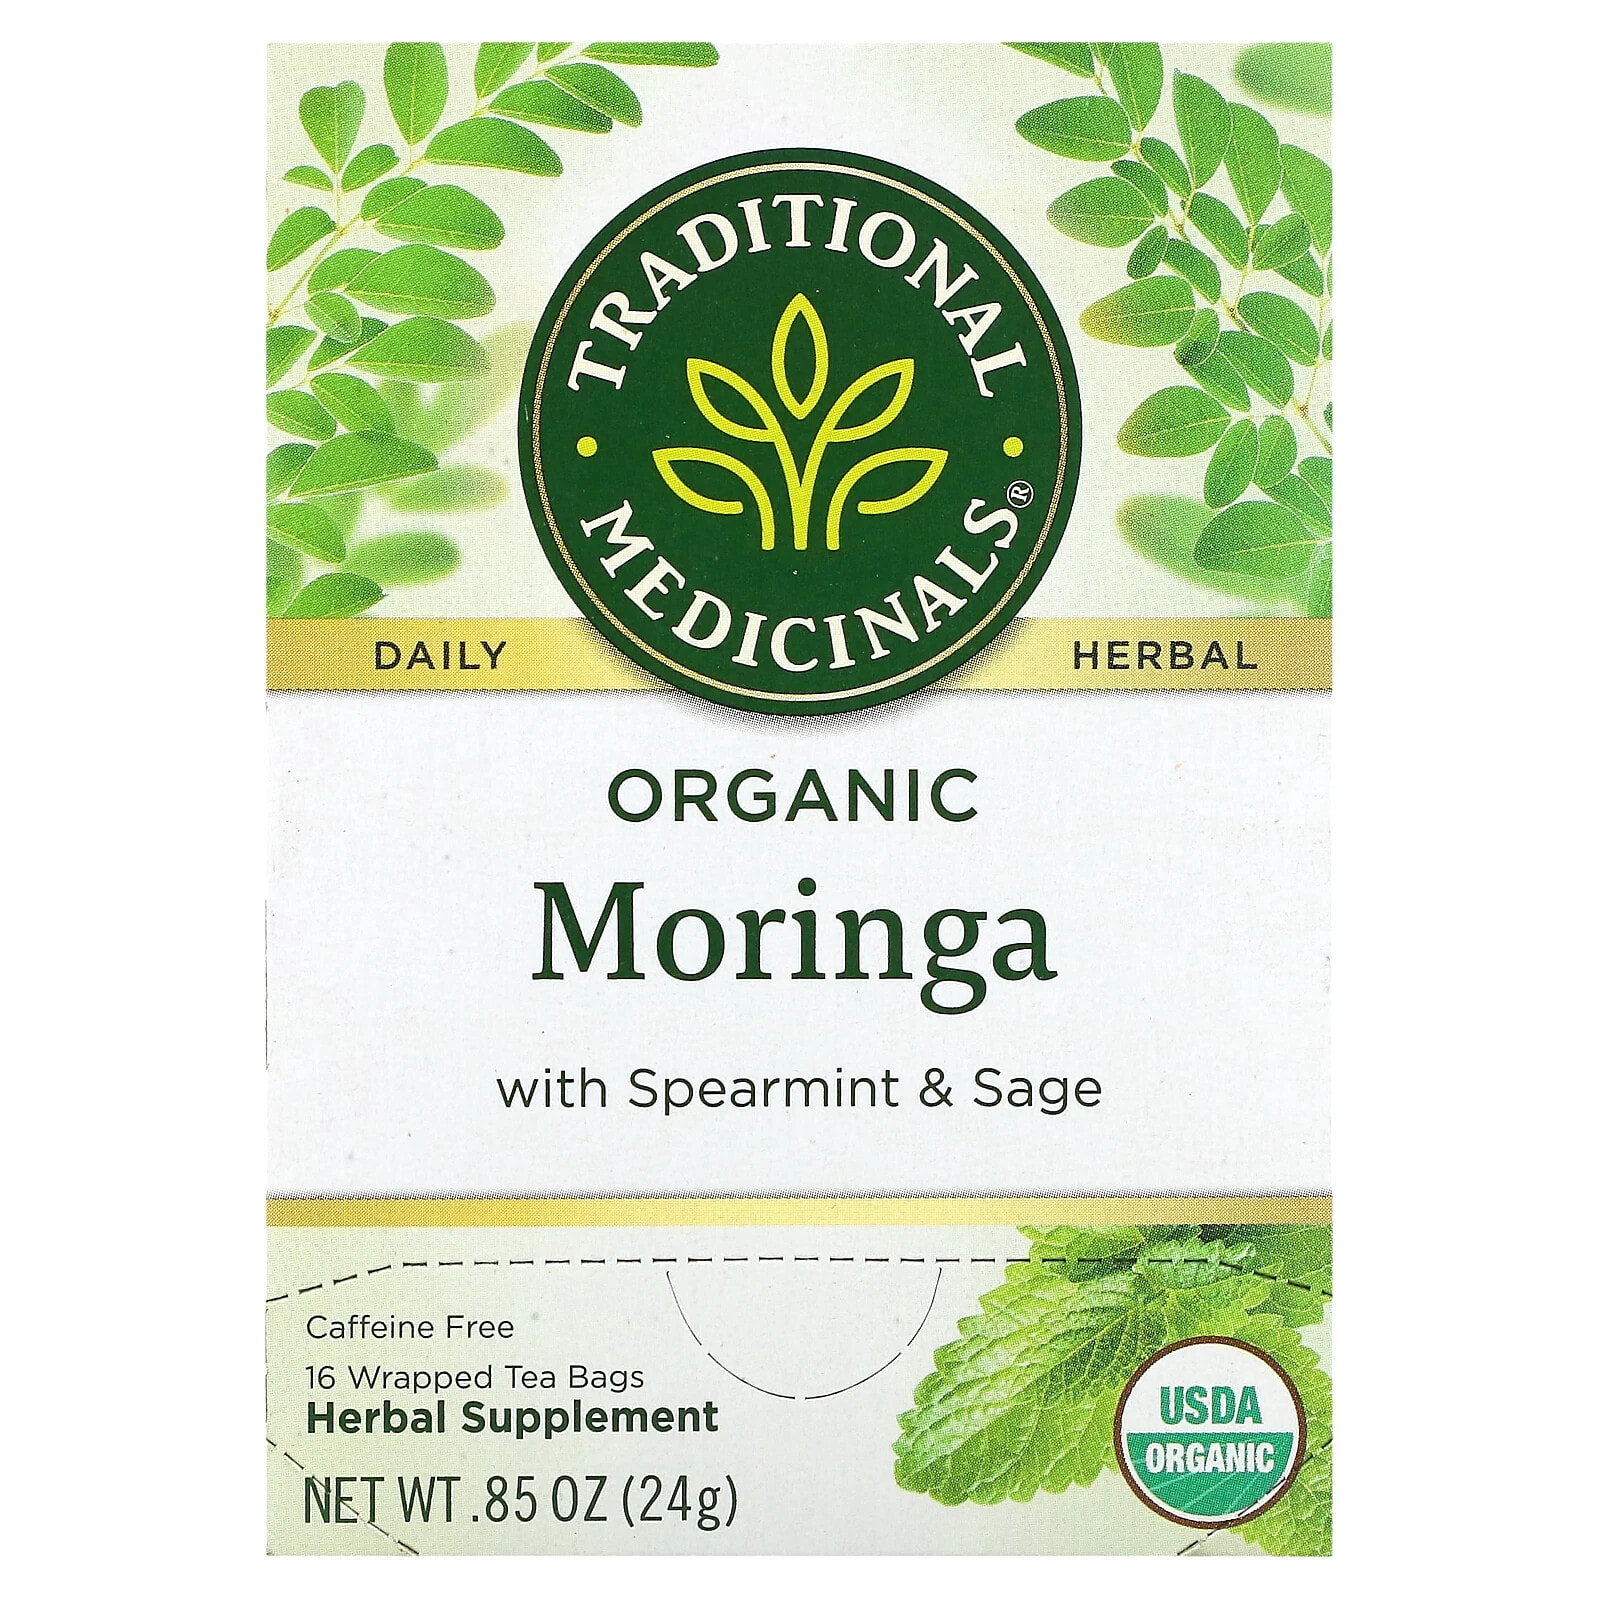 Organic Nettle Leaf, Caffeine Free, 16 Wrapped Tea Bags, 1.13 oz (32 g)